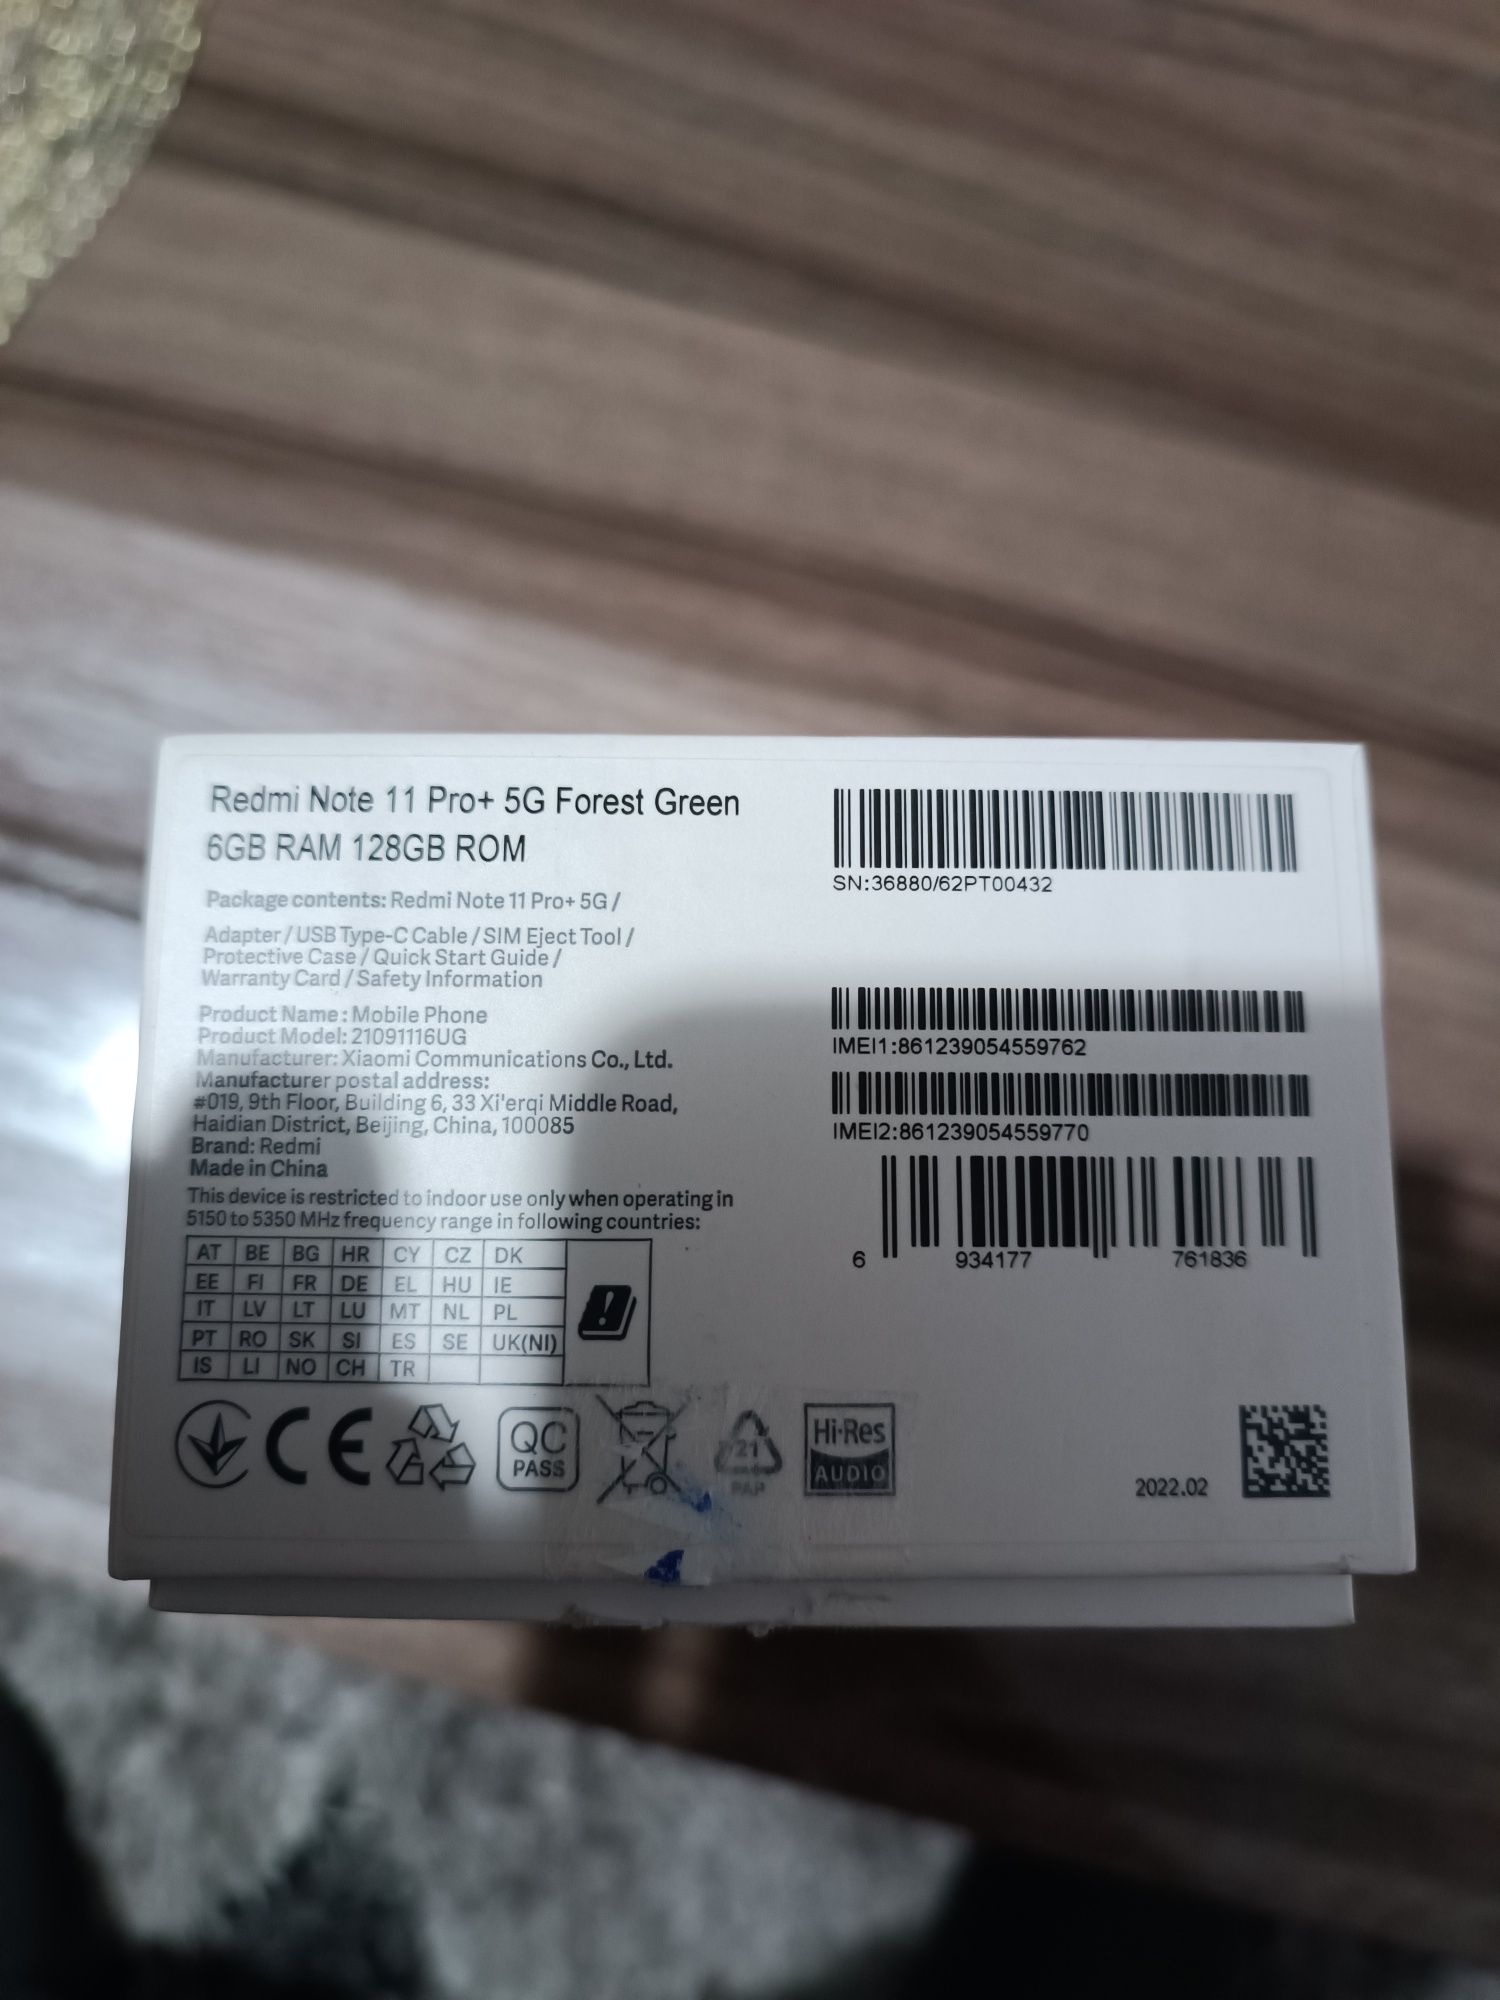 Xiaomi Redmi Note 11 Pro+ 5G